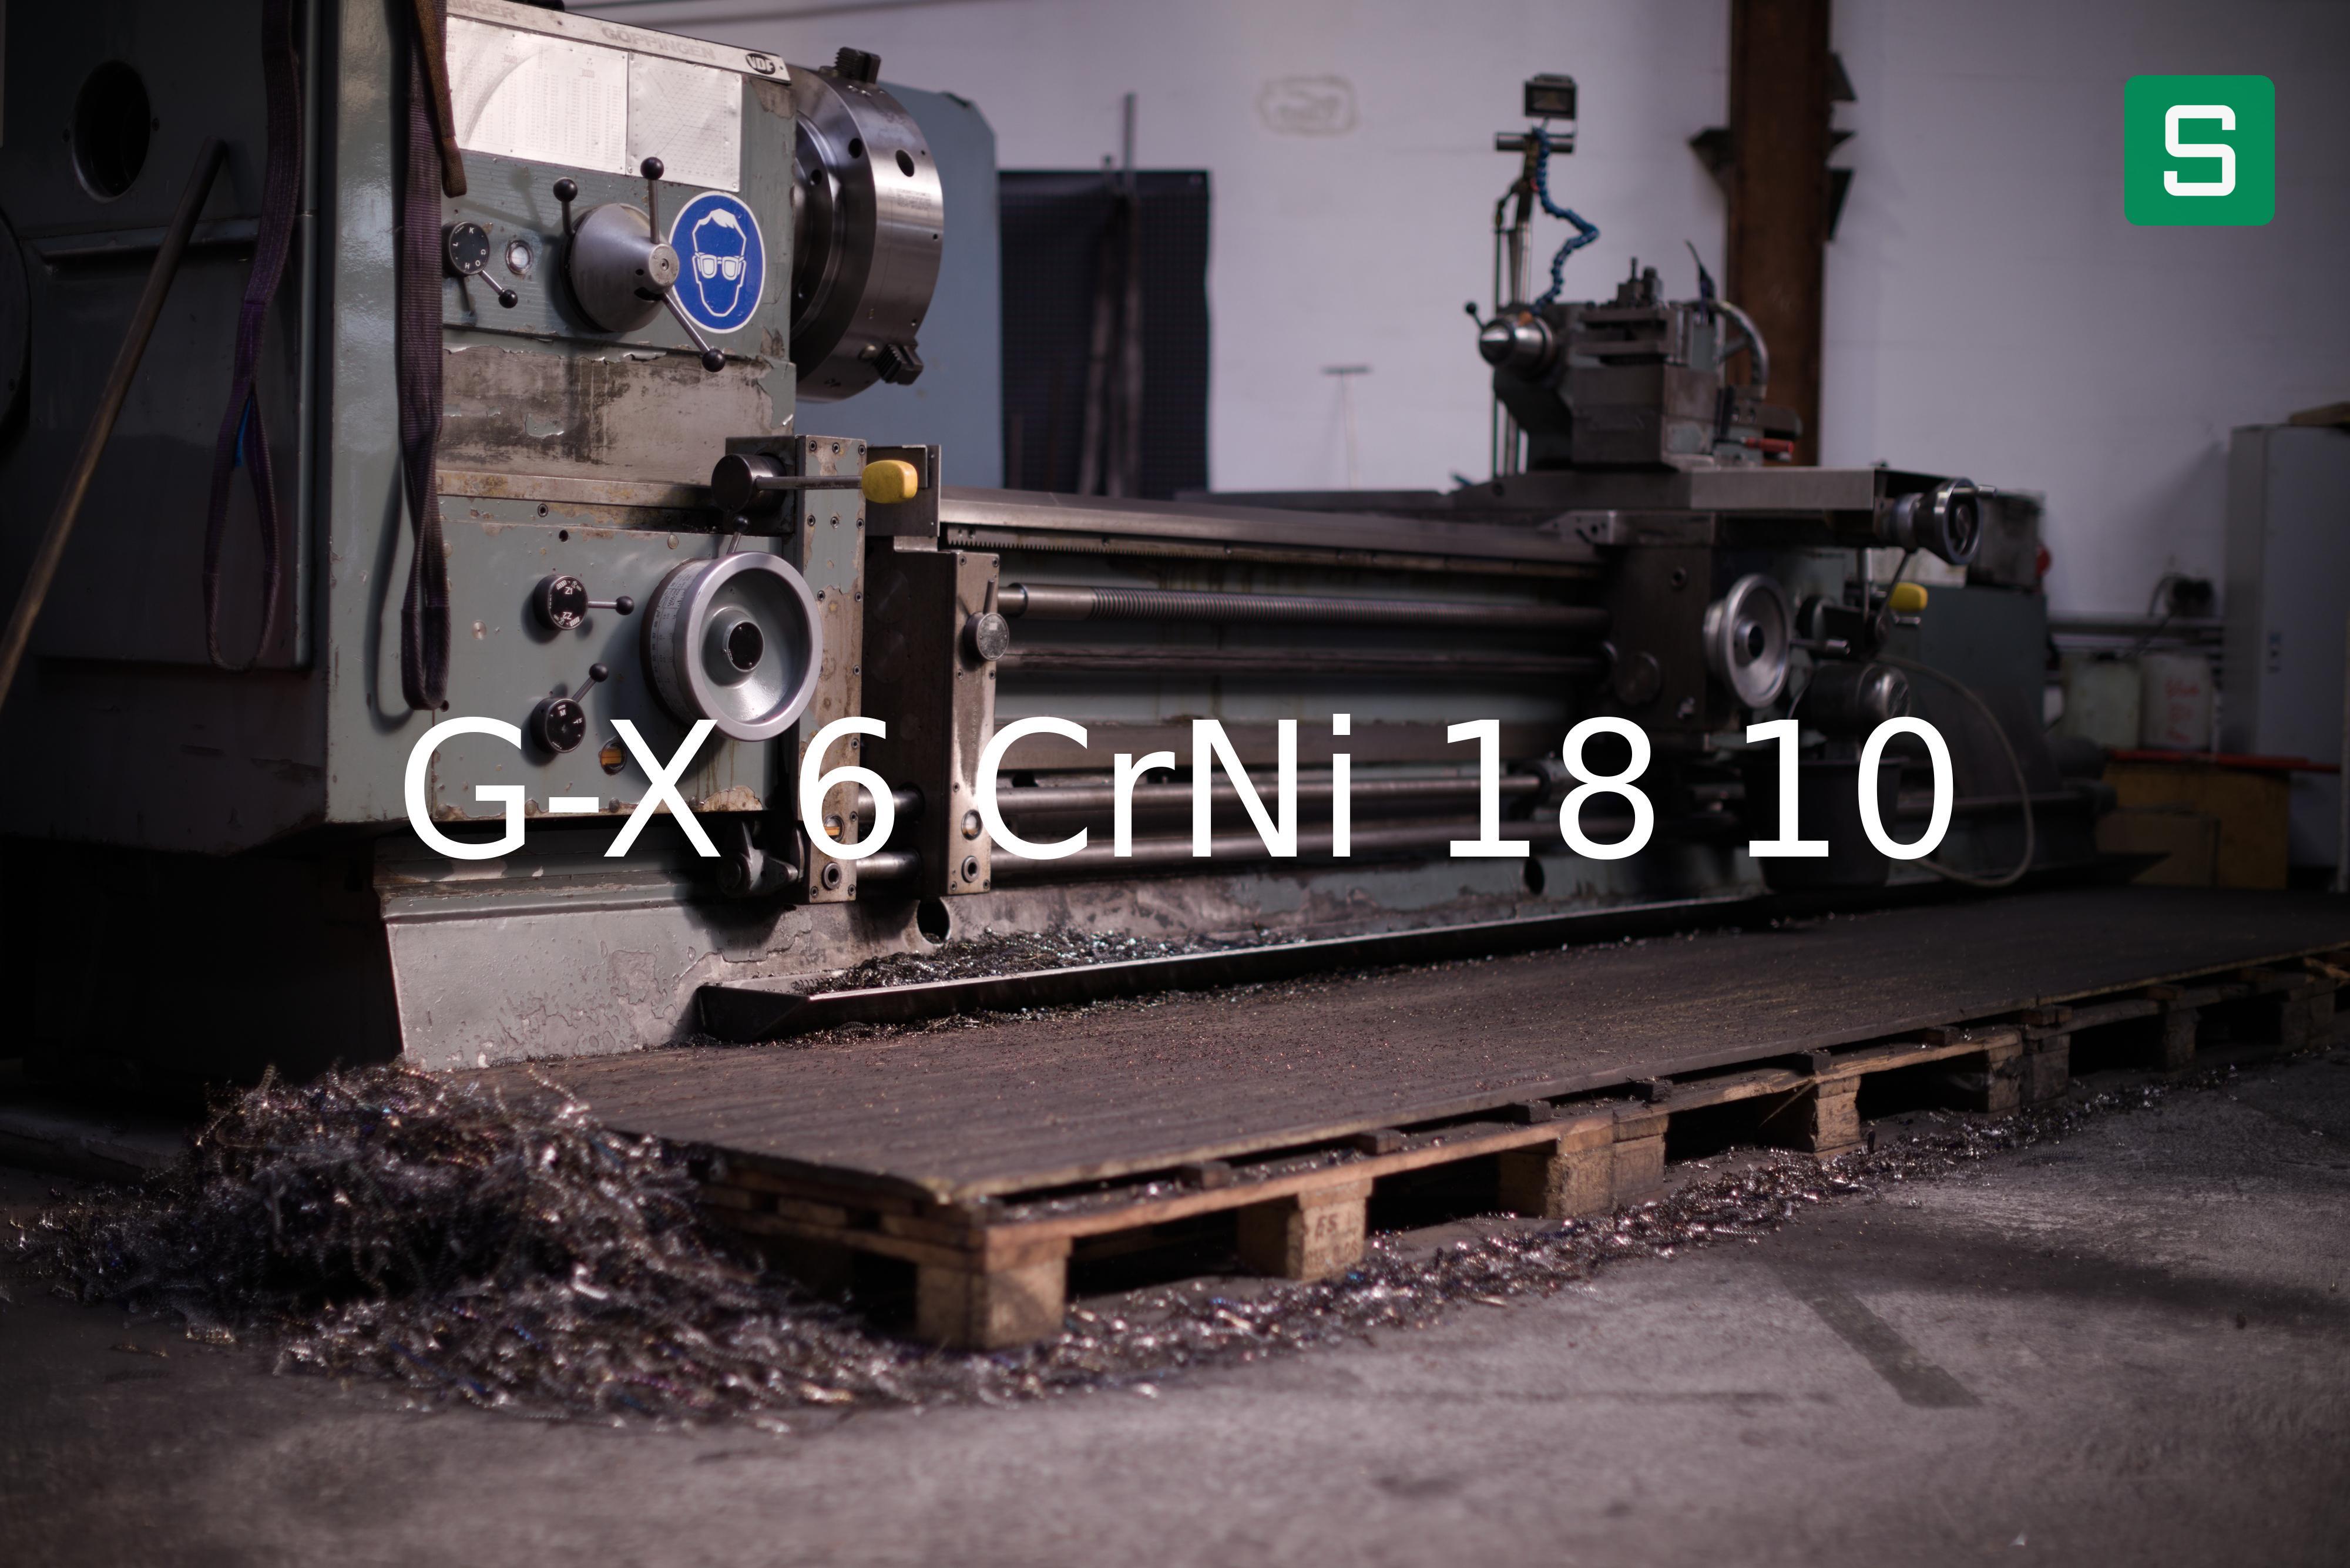 Steel Material: G-X 6 CrNi 18 10